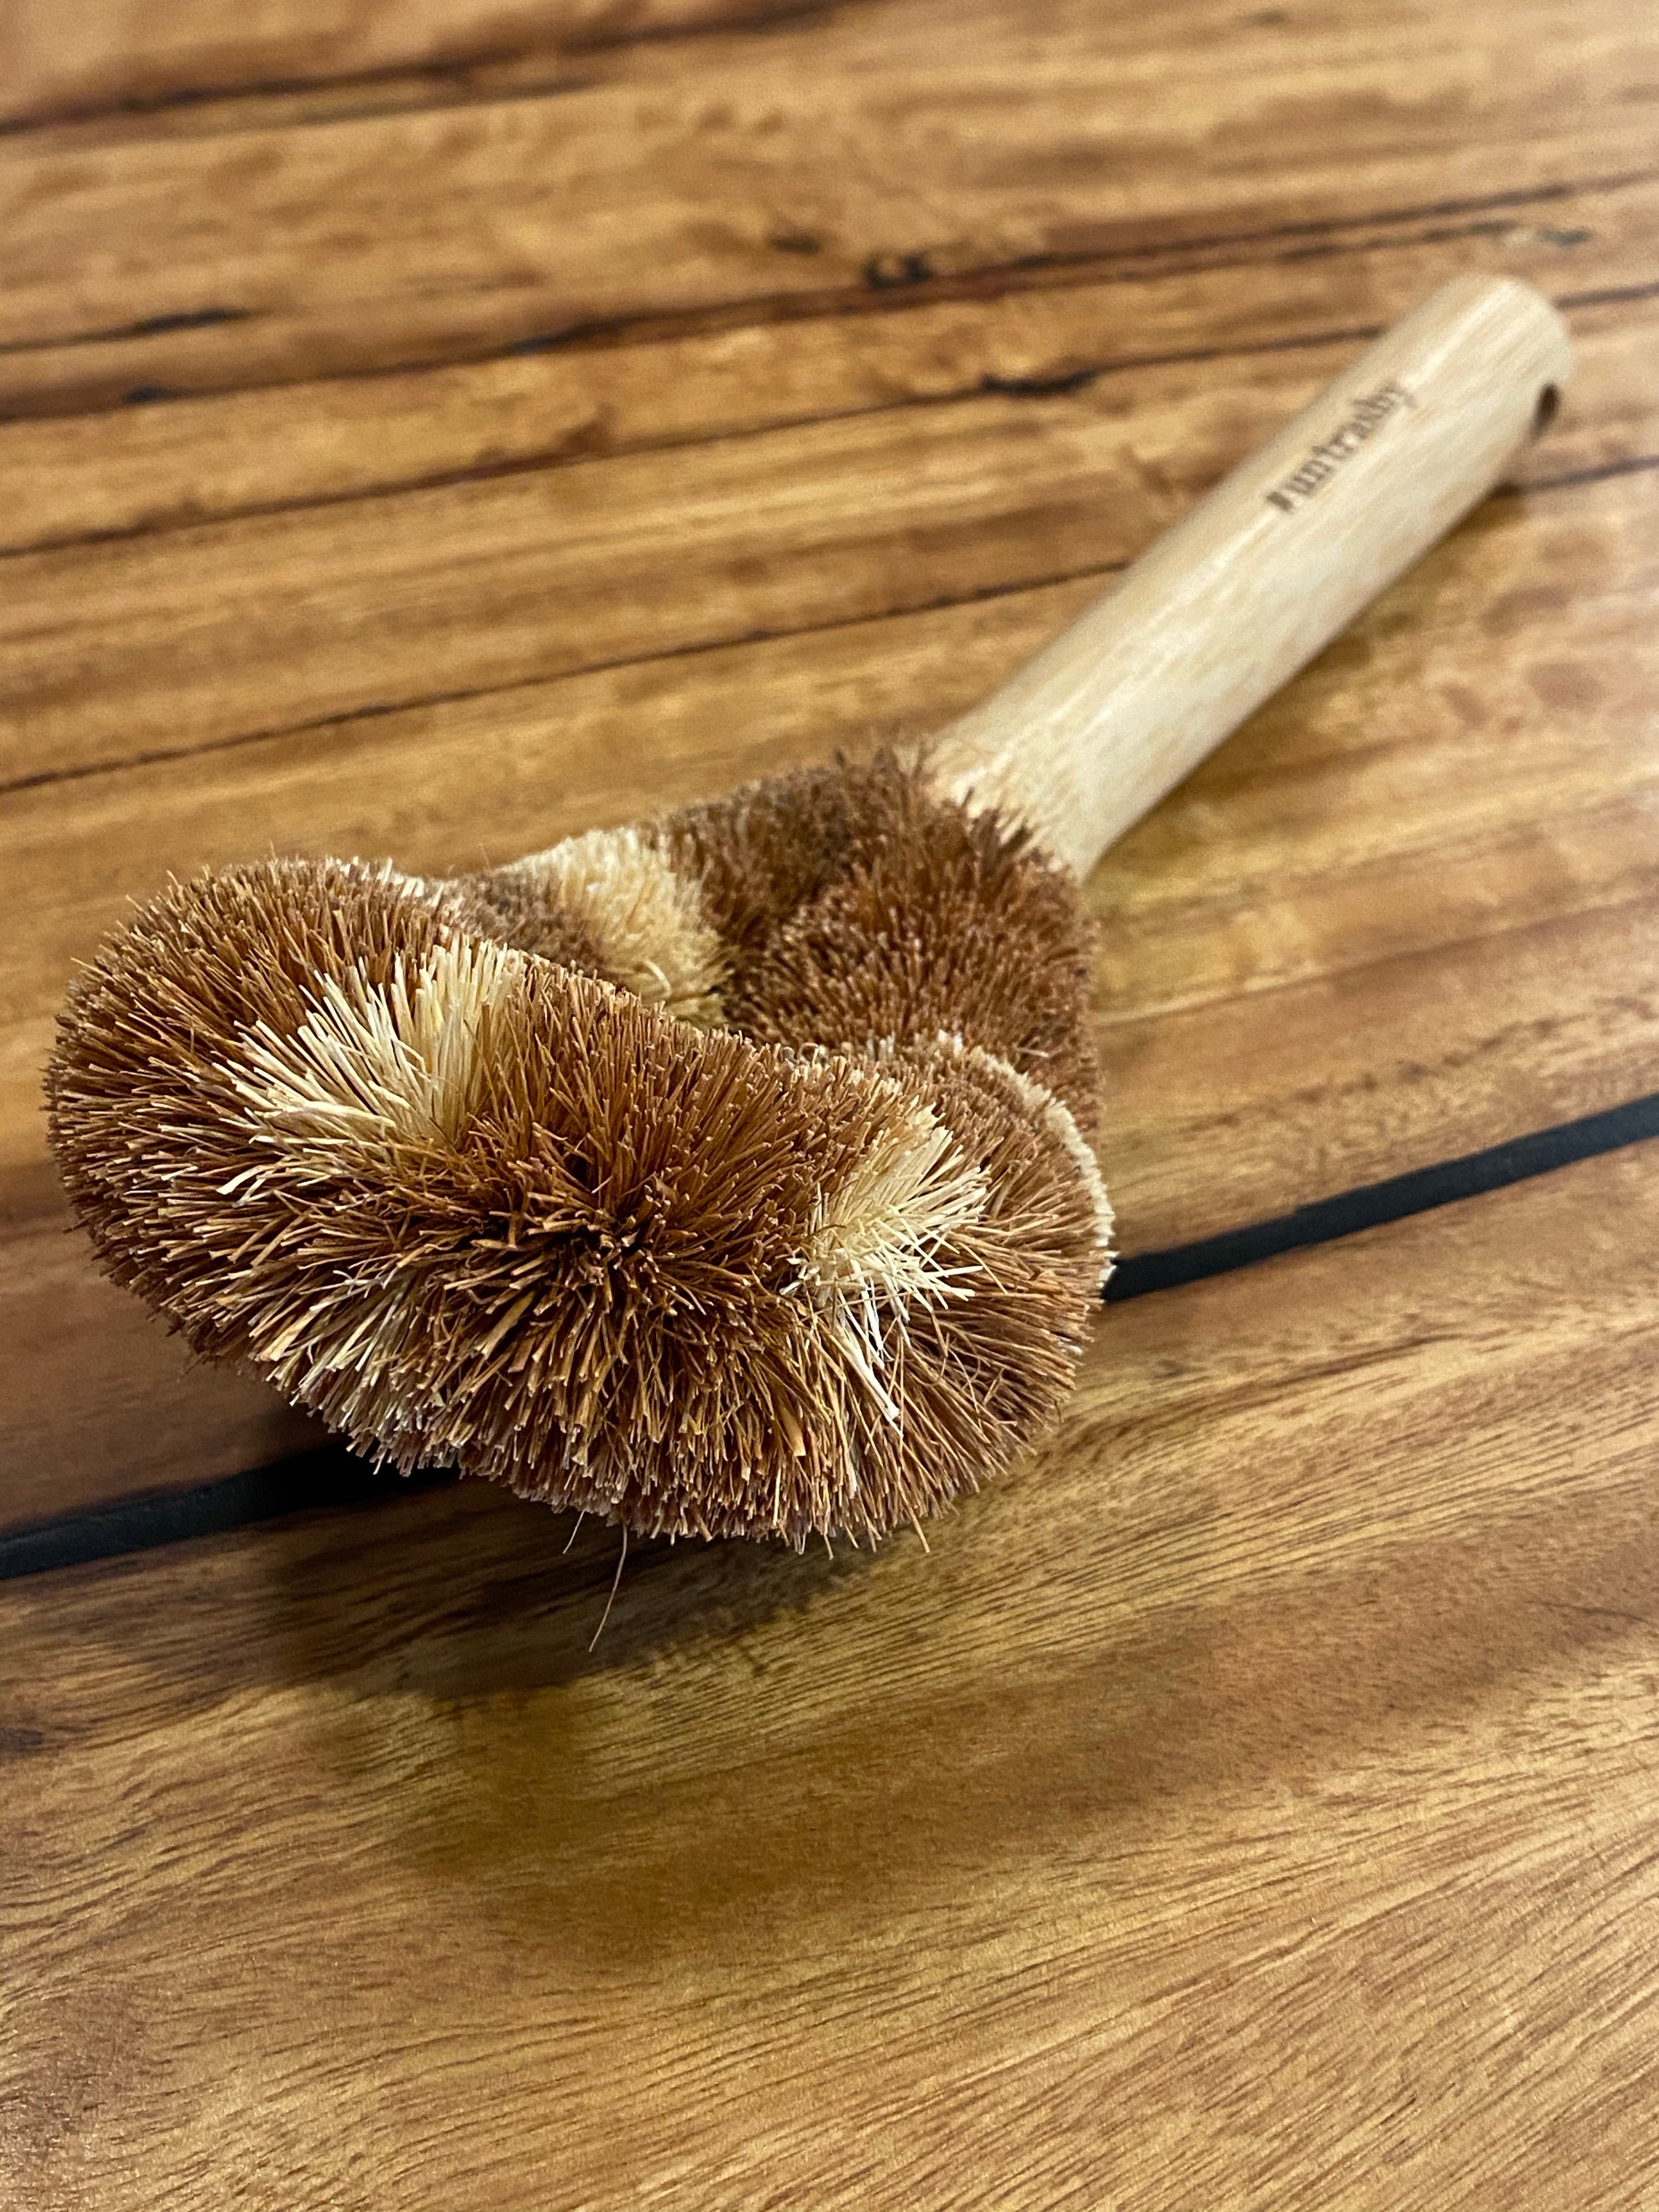 coconut husk dish brush on wooden table